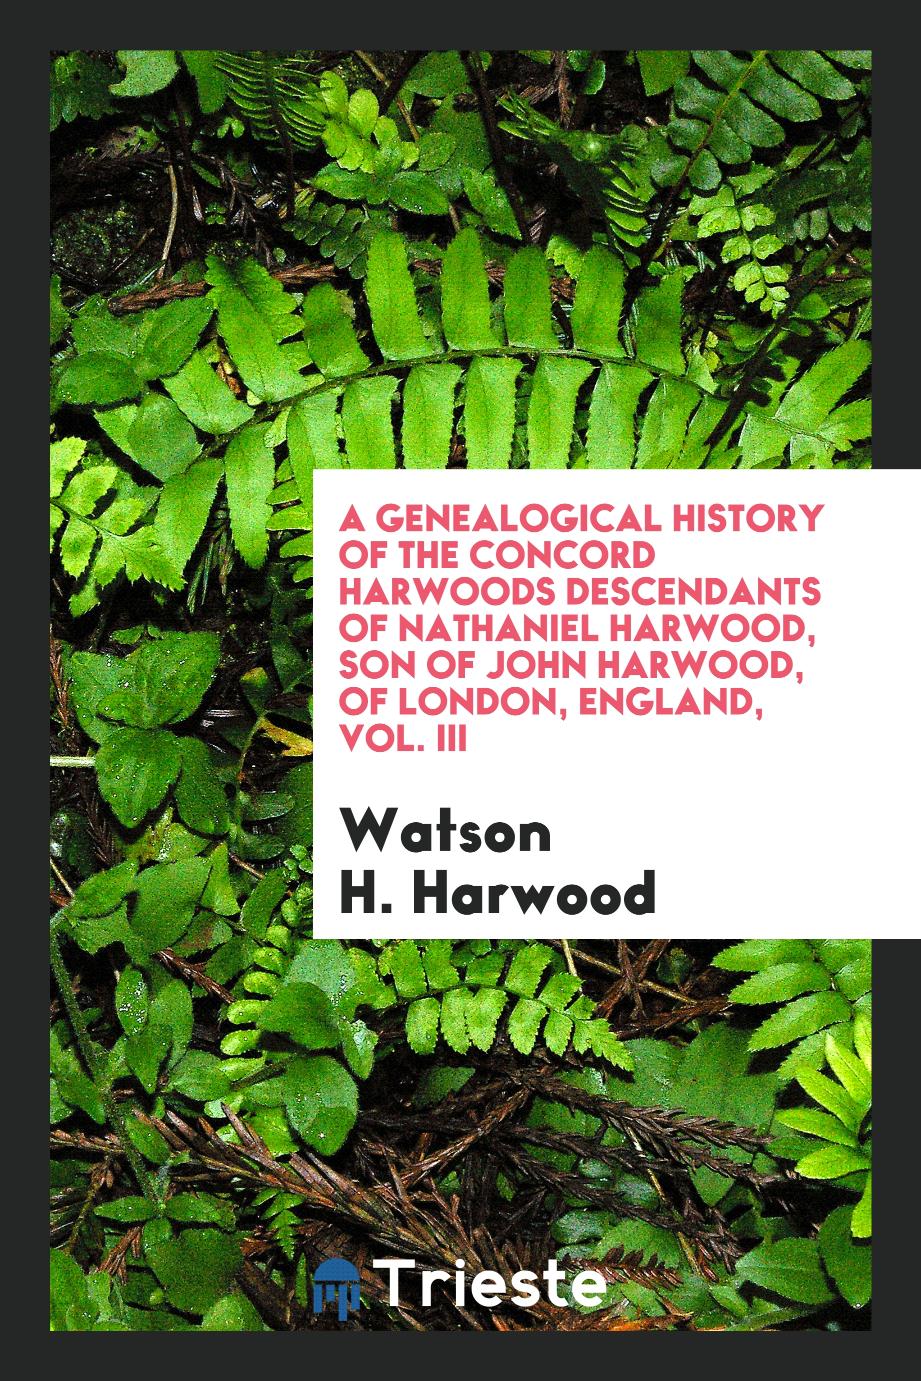 A Genealogical History of the Concord Harwoods Descendants of Nathaniel Harwood, Son of John Harwood, of London, England, Vol. III